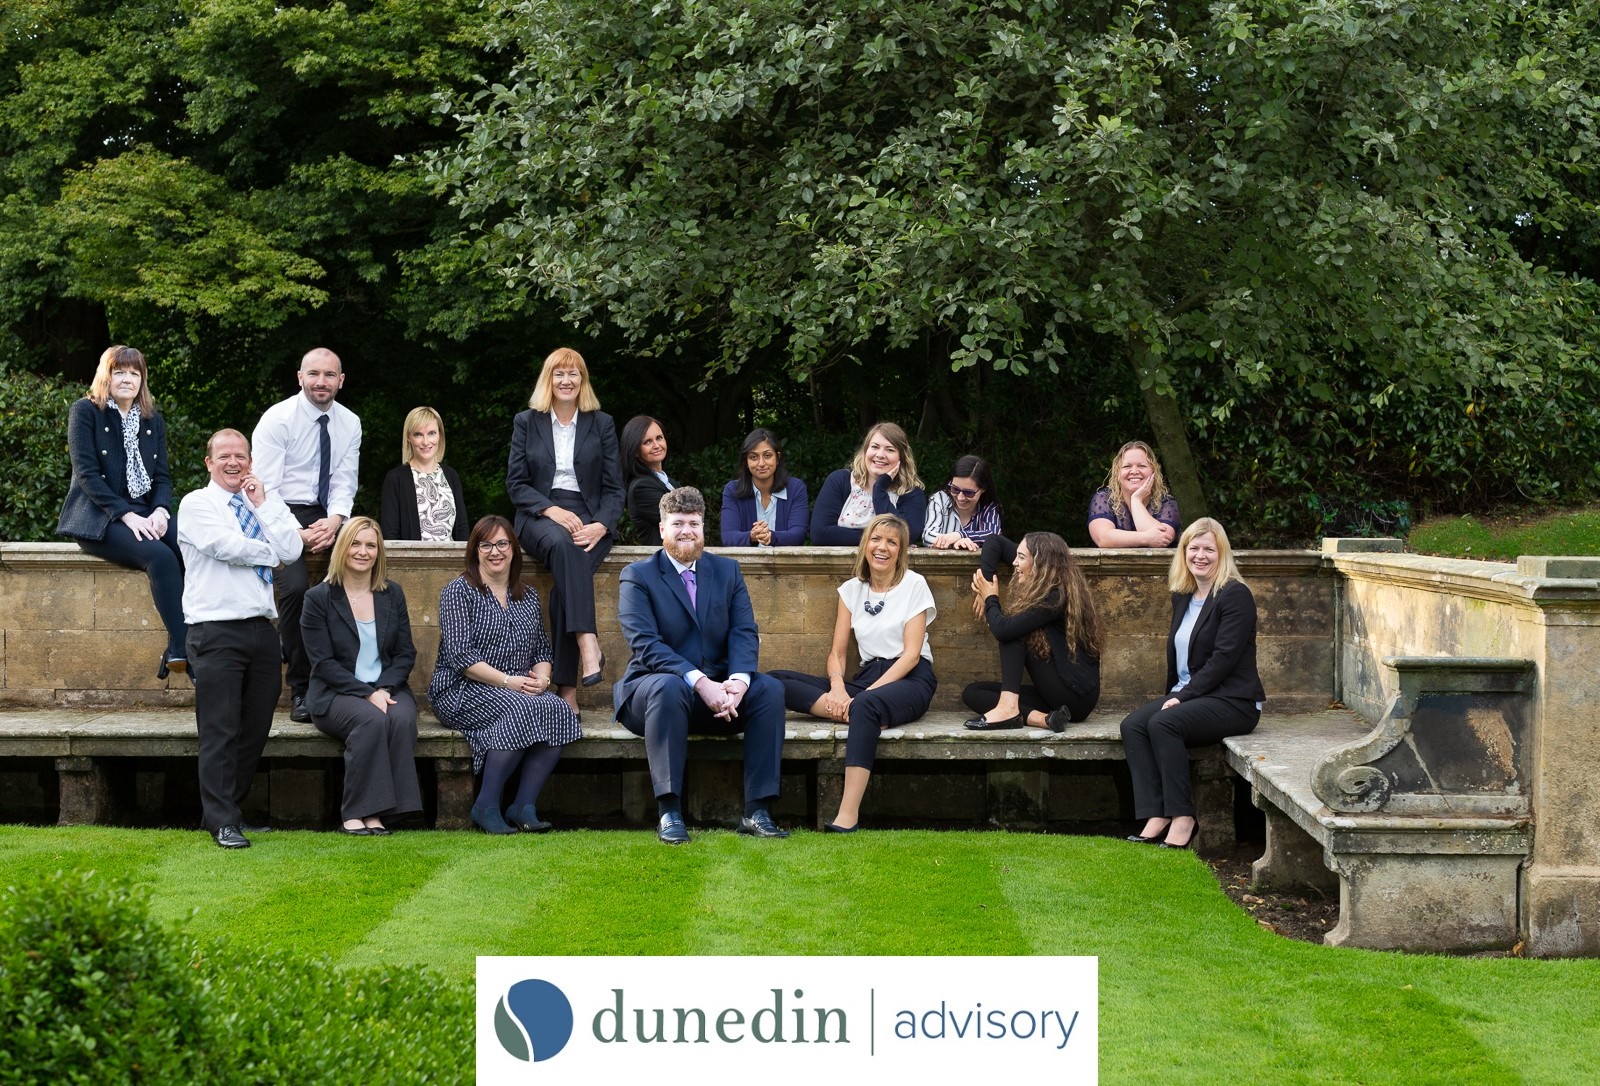 Dunedin Advisory becomes an Employee Ownership Trust